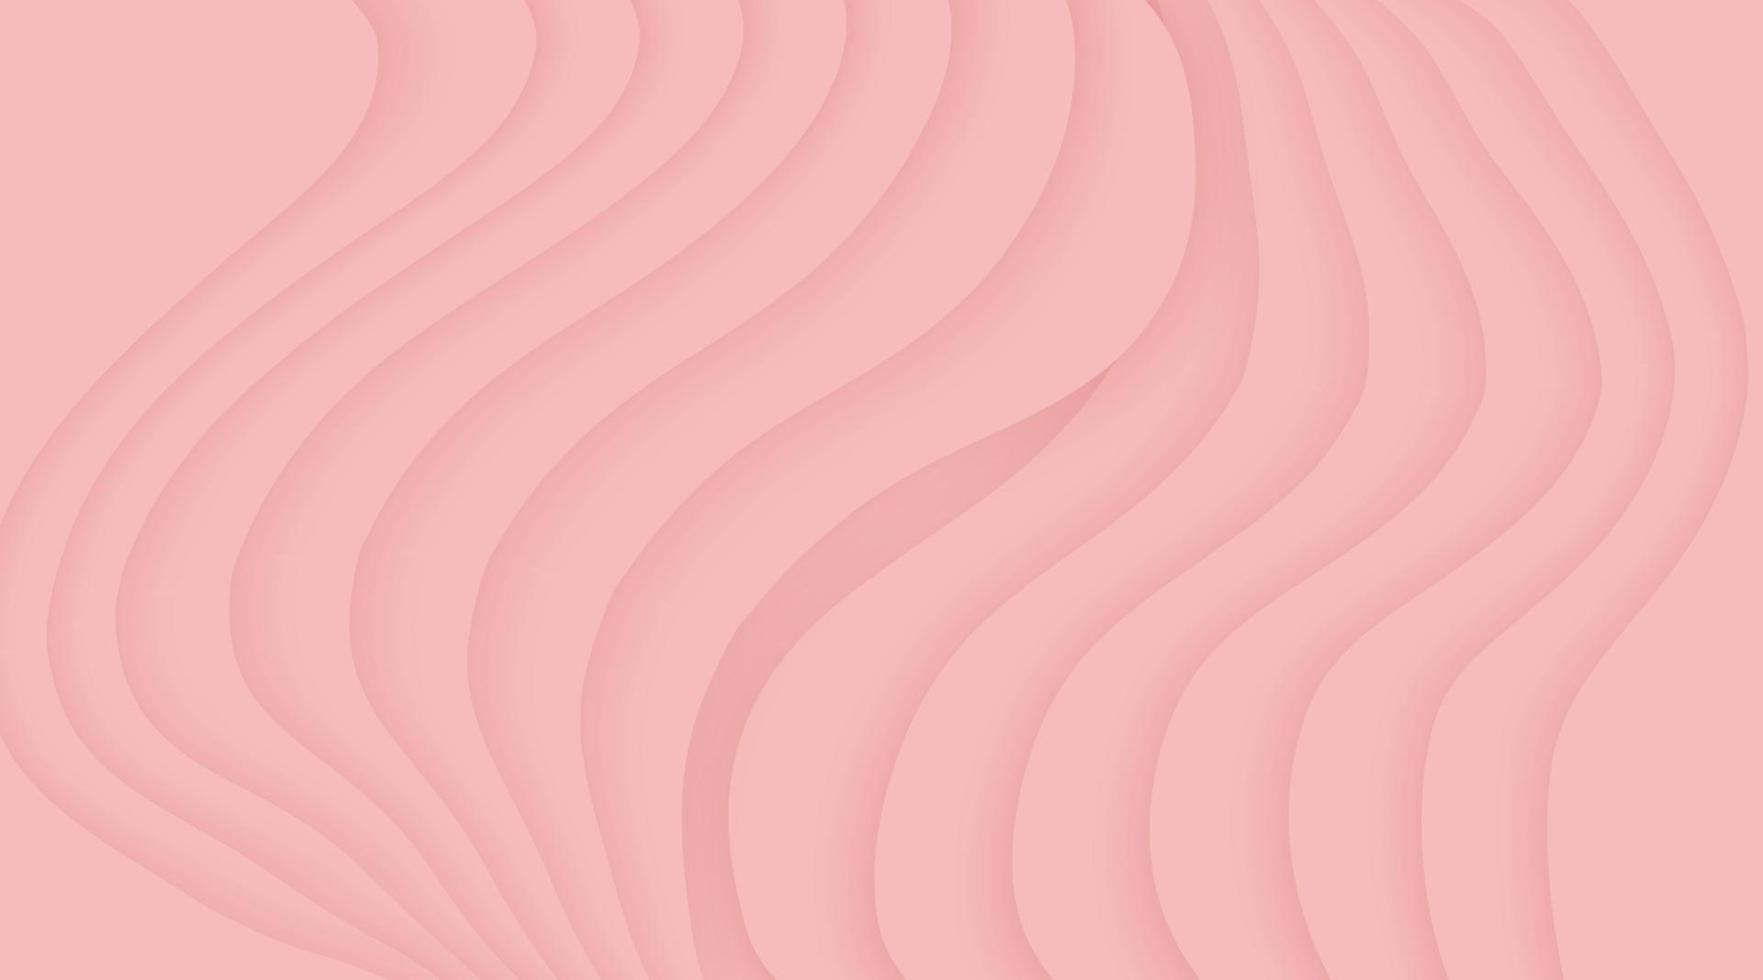 vector de onda superpuesta textura color rosa